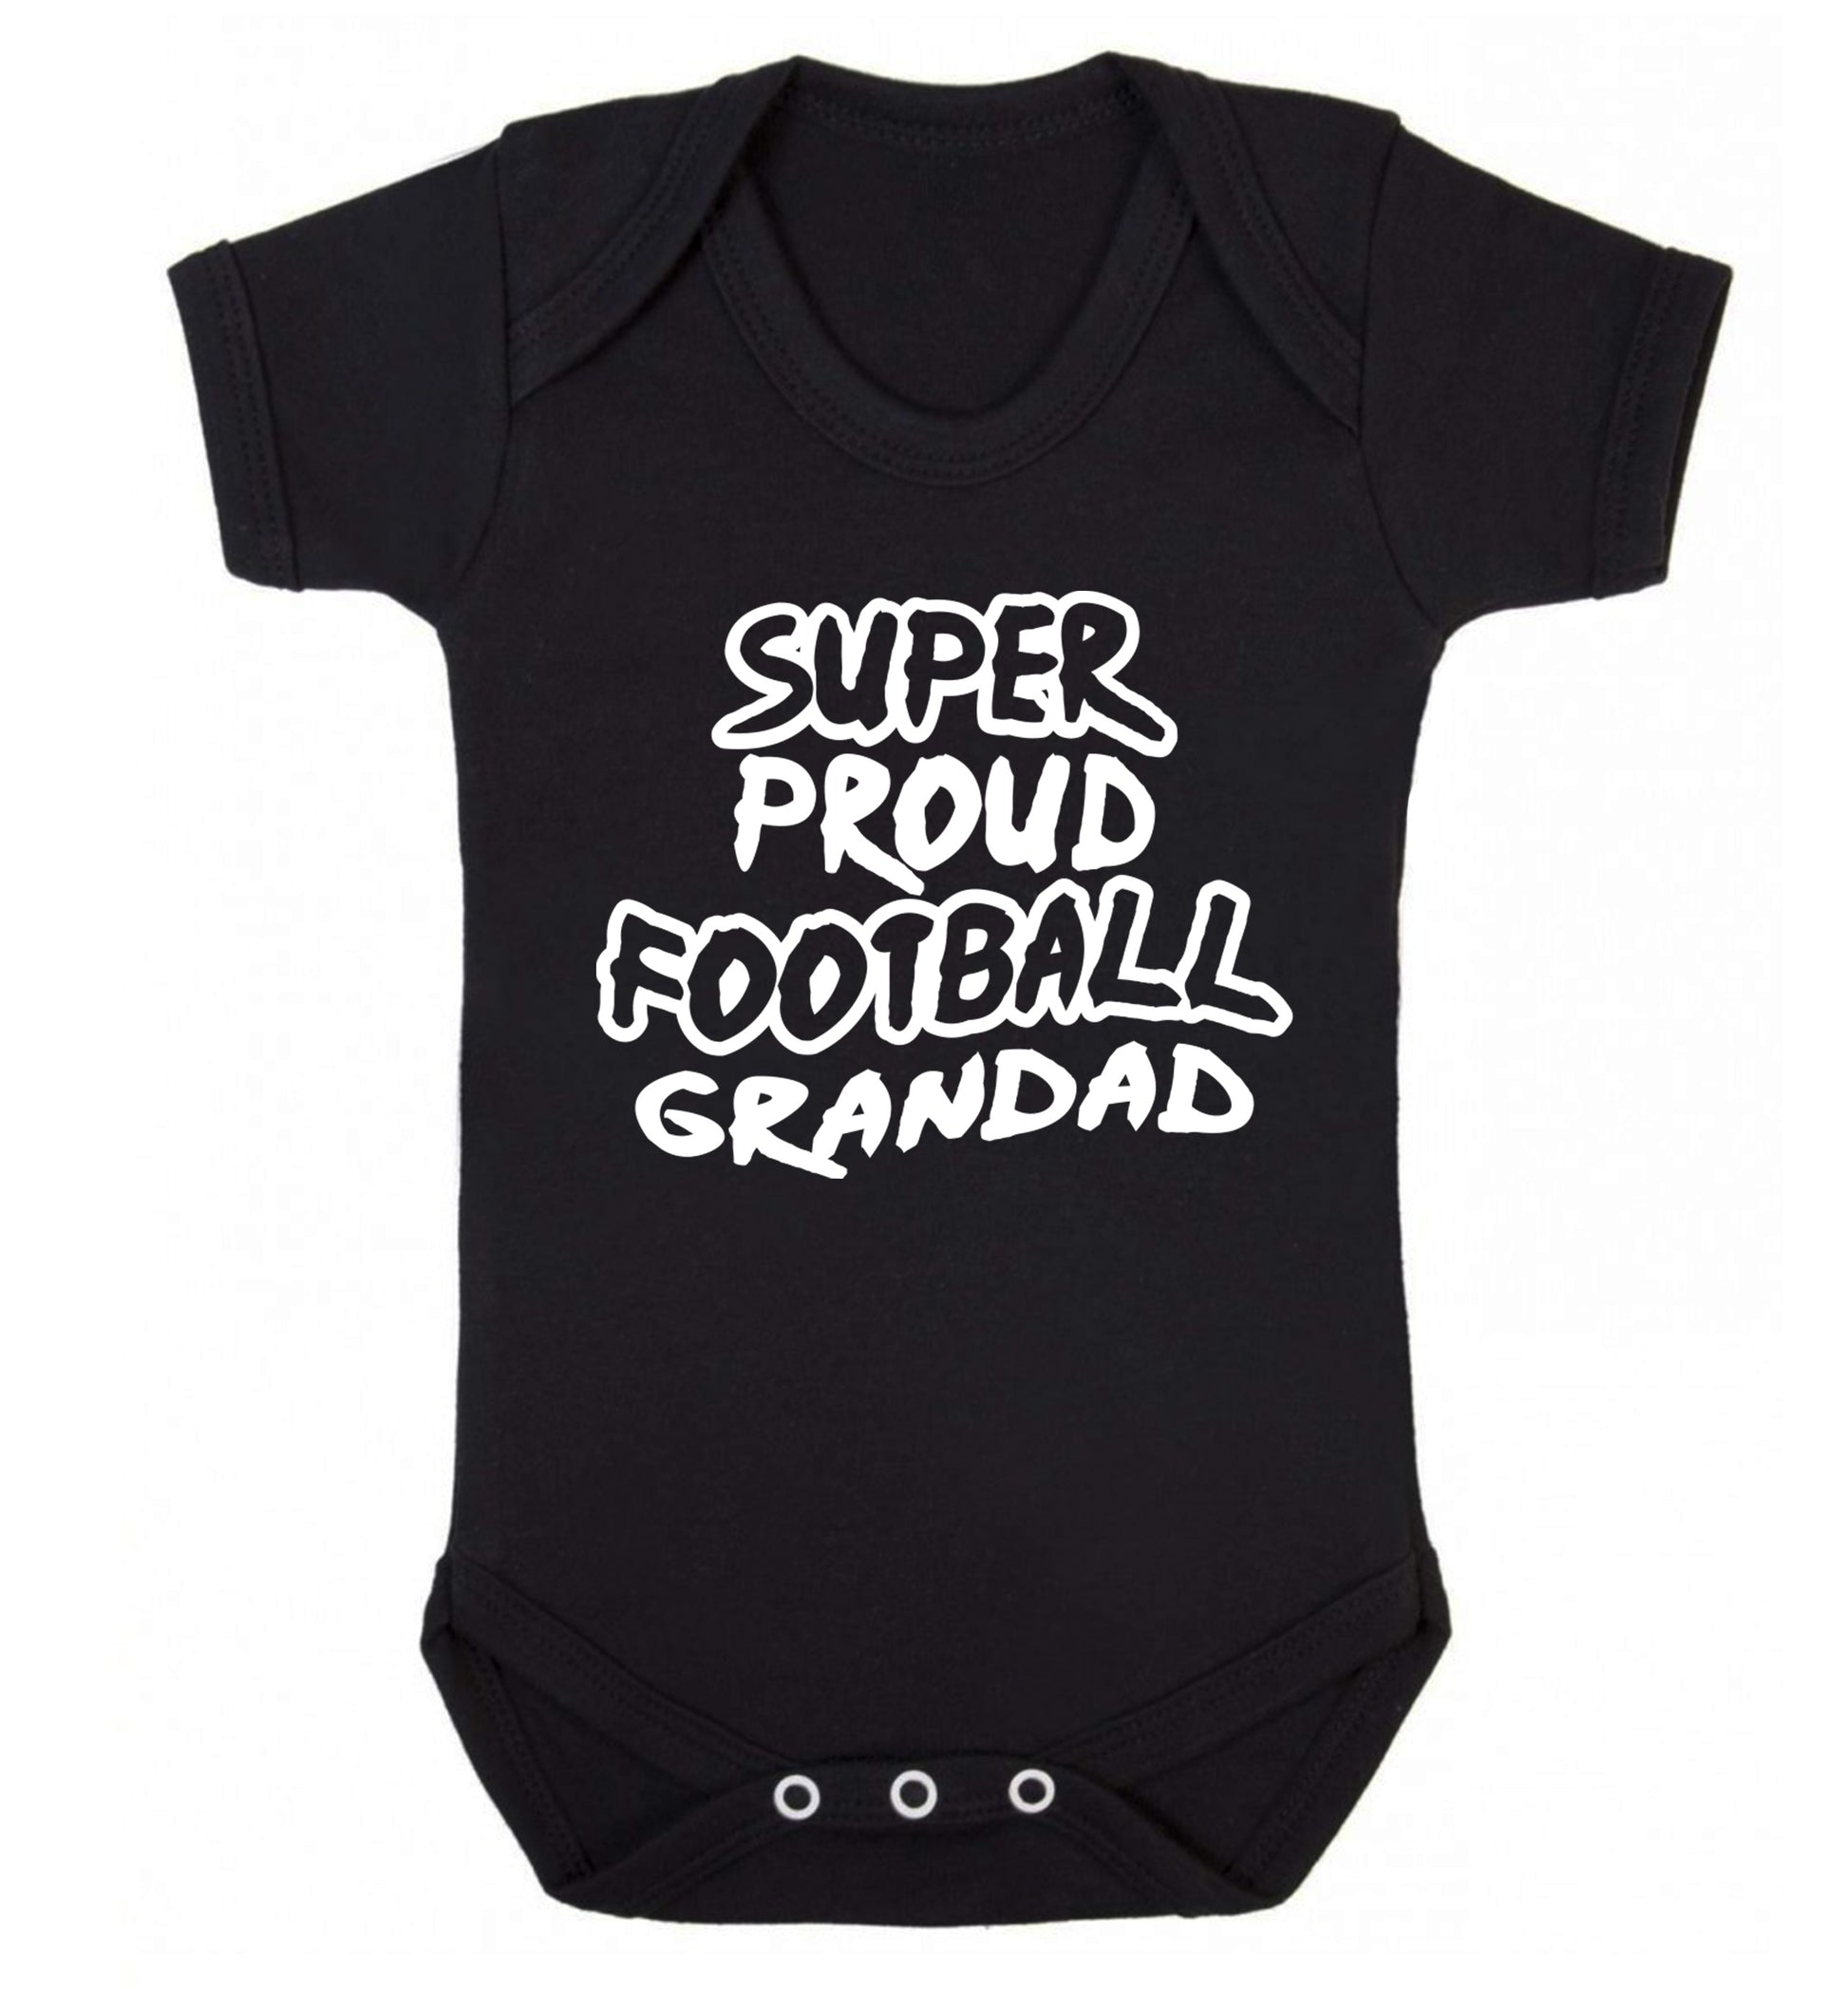 Super proud football grandad Baby Vest black 18-24 months